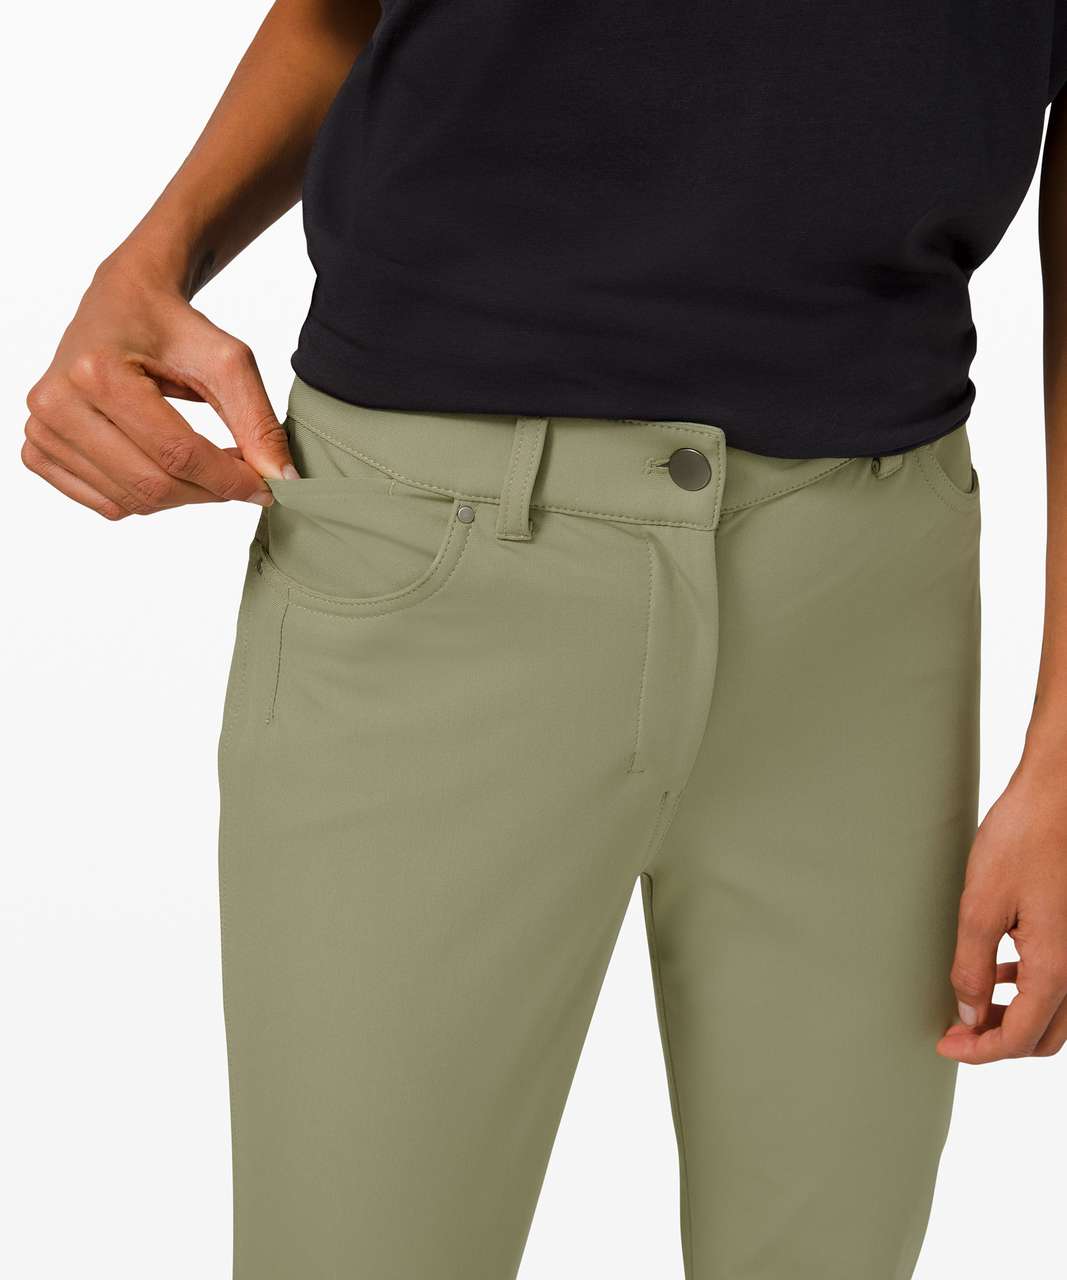 Lululemon City Sleek 5 Pocket 7/8 Pant  Trousers women, 7/8th pants, Pants  for women